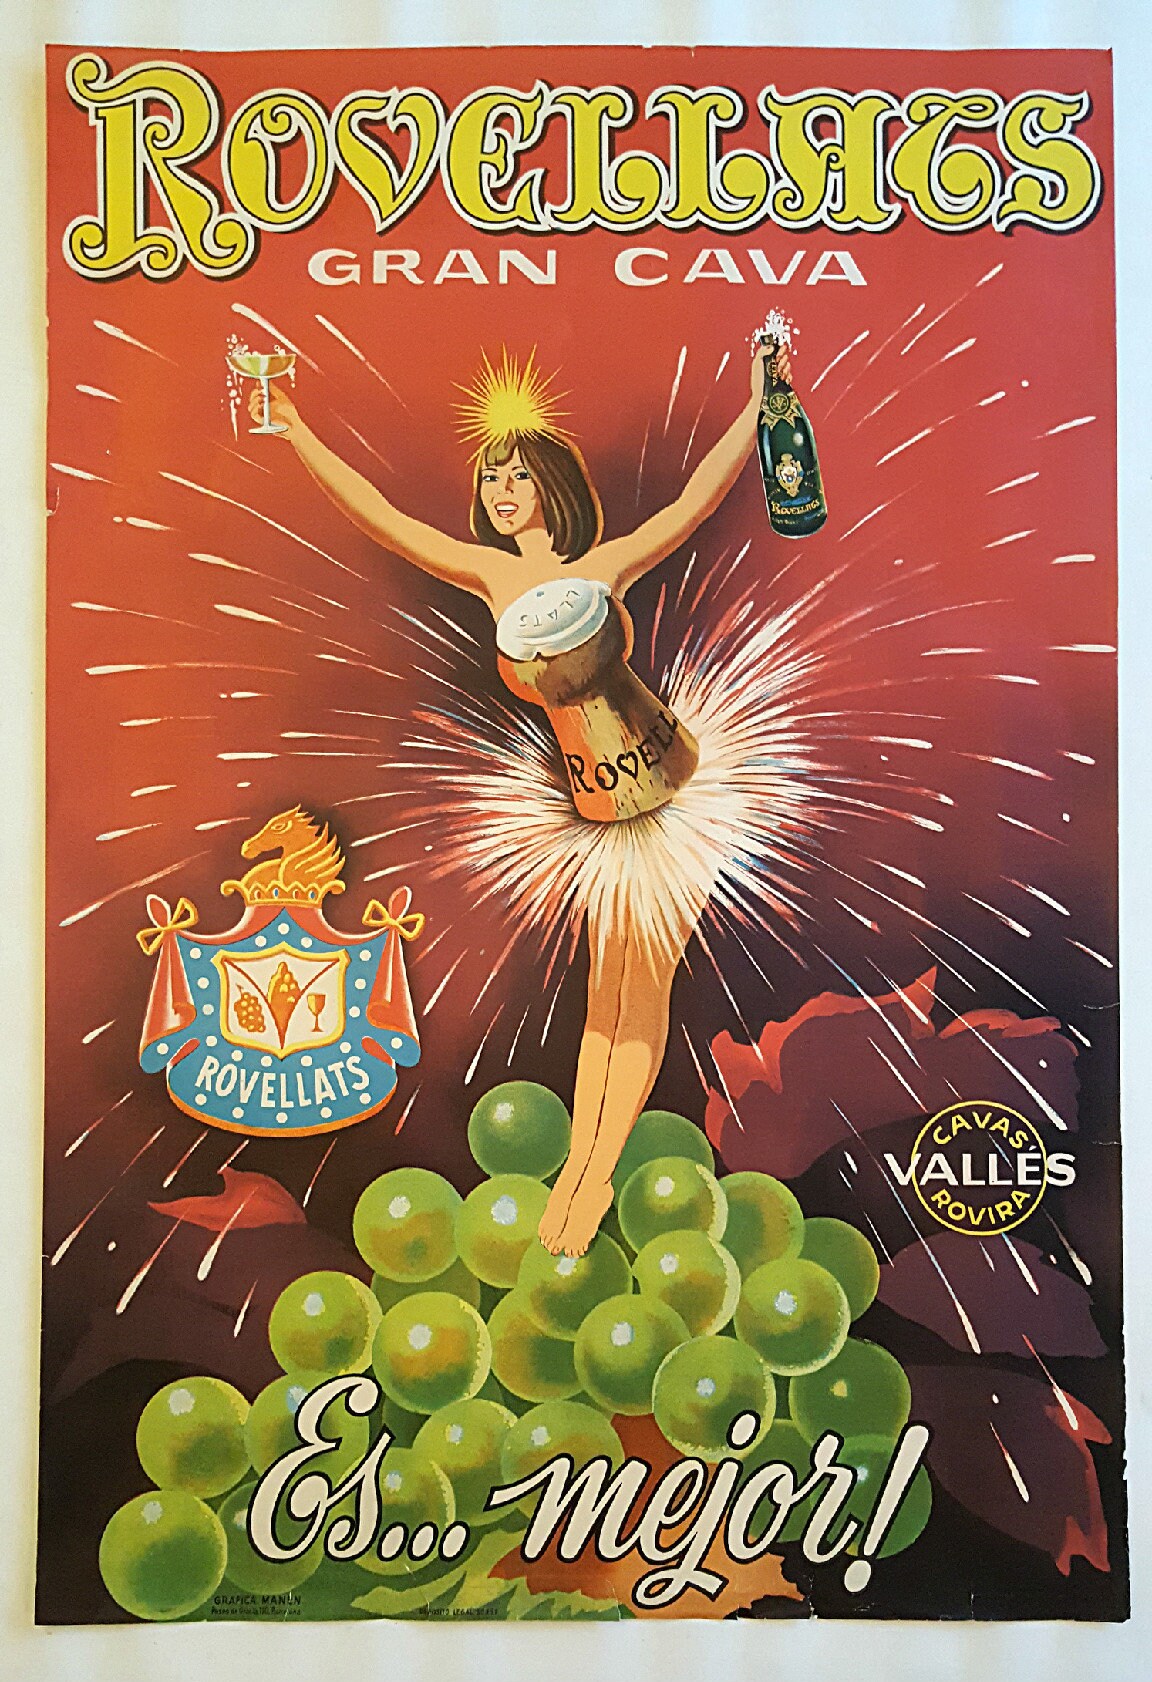 1940 Cava Advertisement "Rovellats" - Spanish Cava - Original Vintage Poster